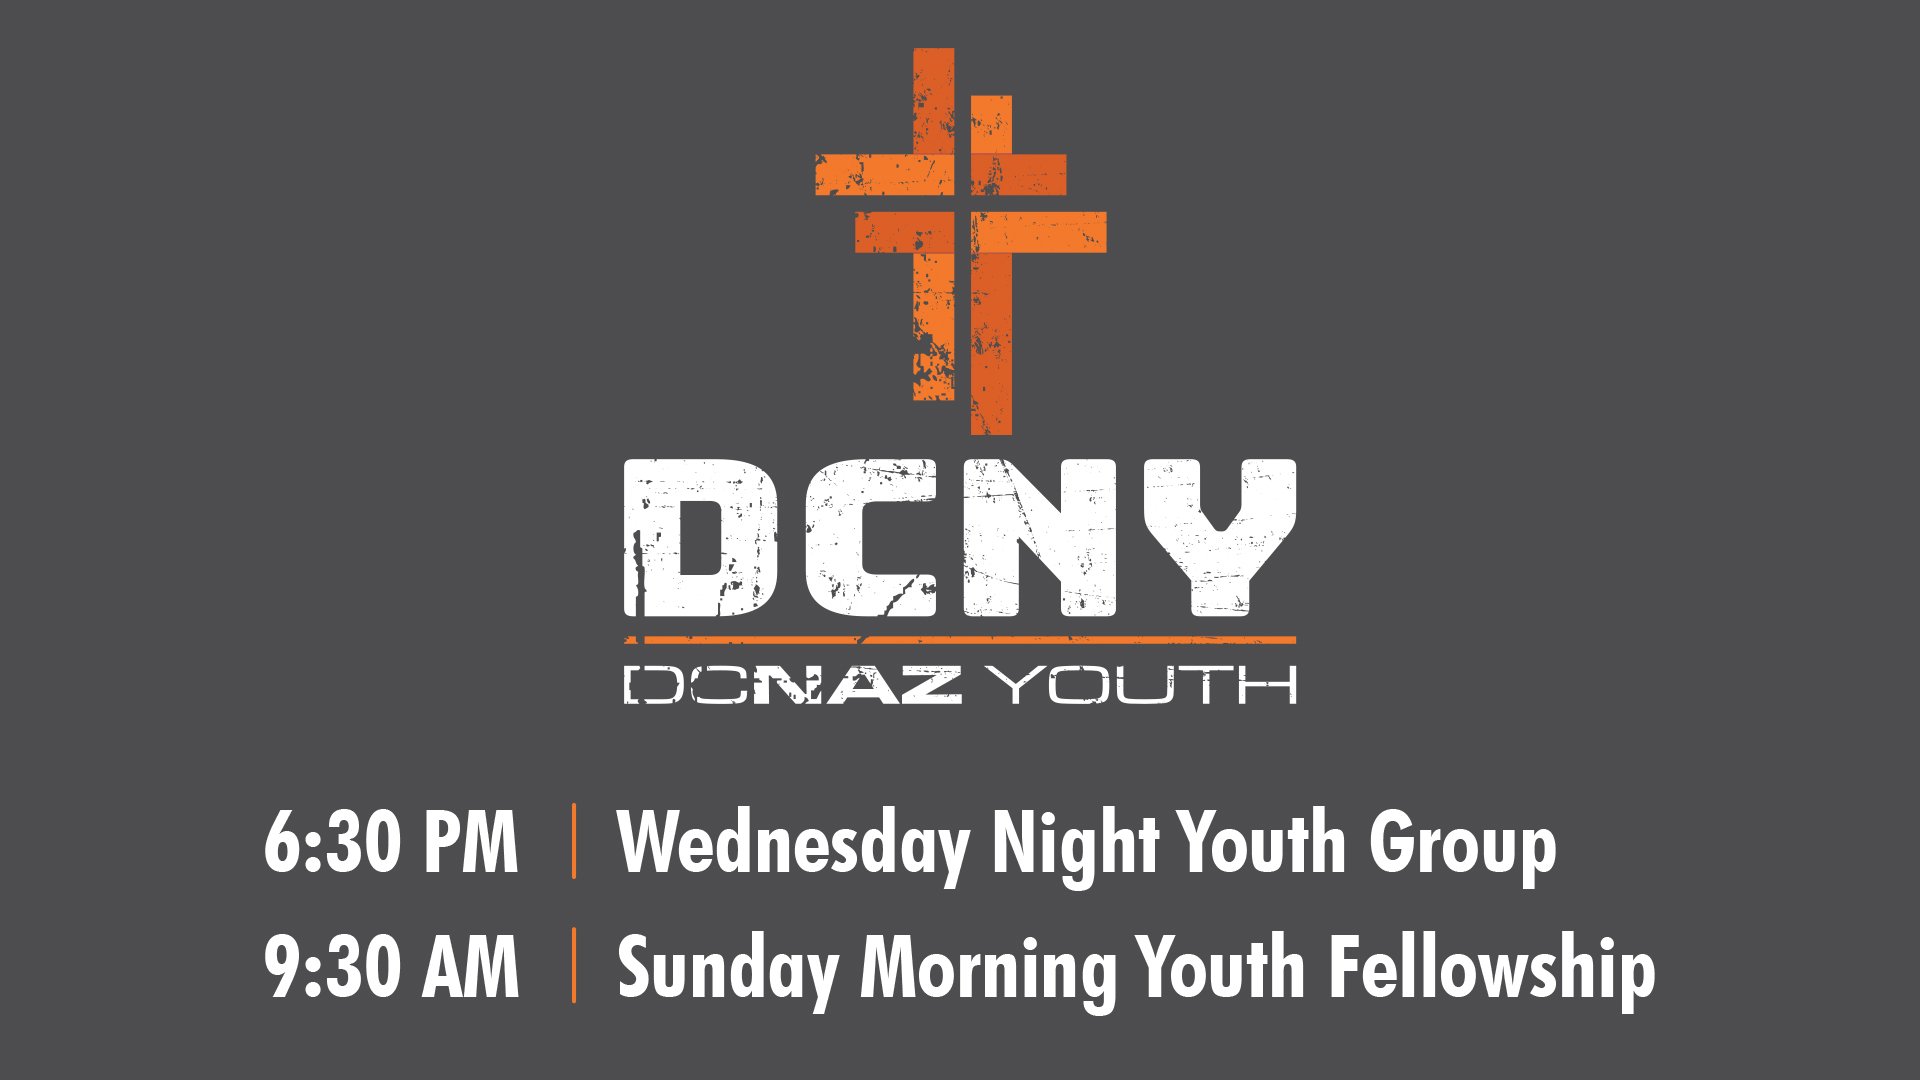 DCNaz Youth Schedule 1920x1080 slide.jpg